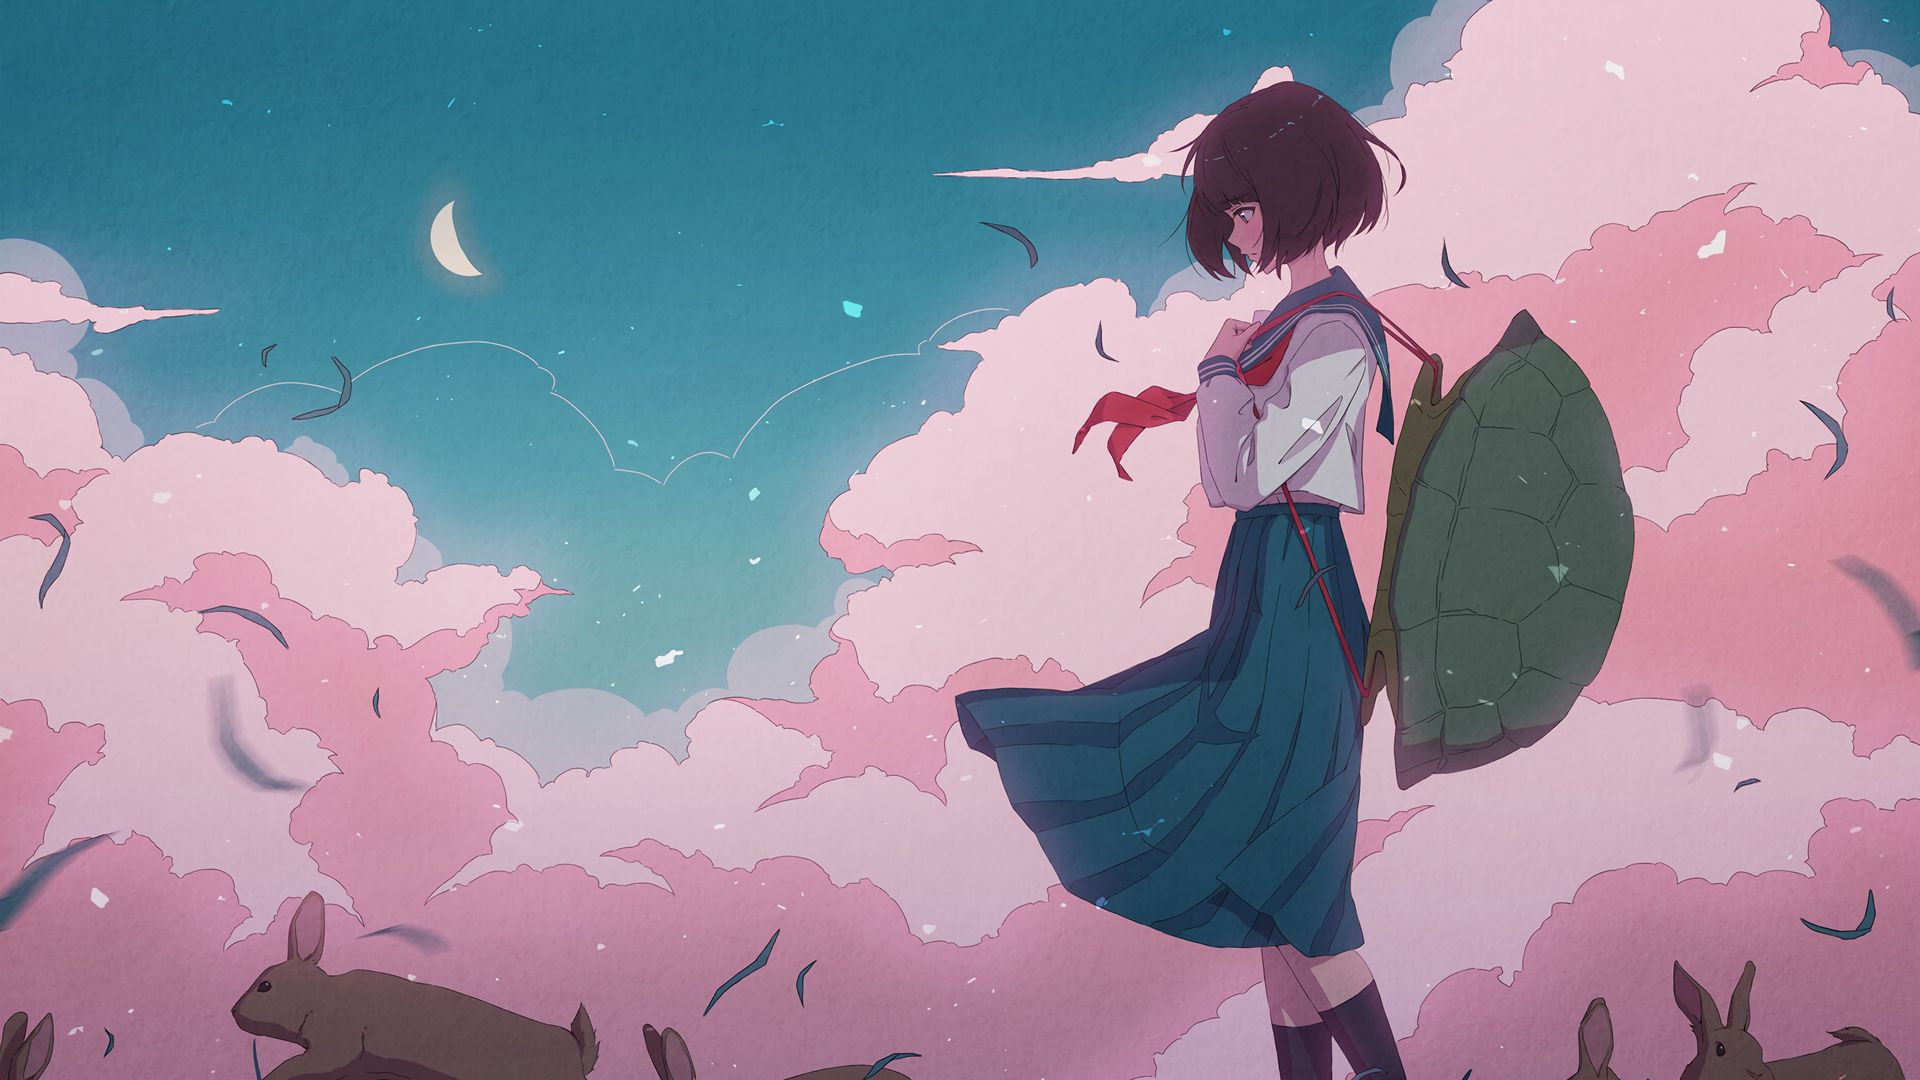 Premium AI Image  Anime cute kawaii girl character image wallpaper  illustration background sunrise sunset young woman